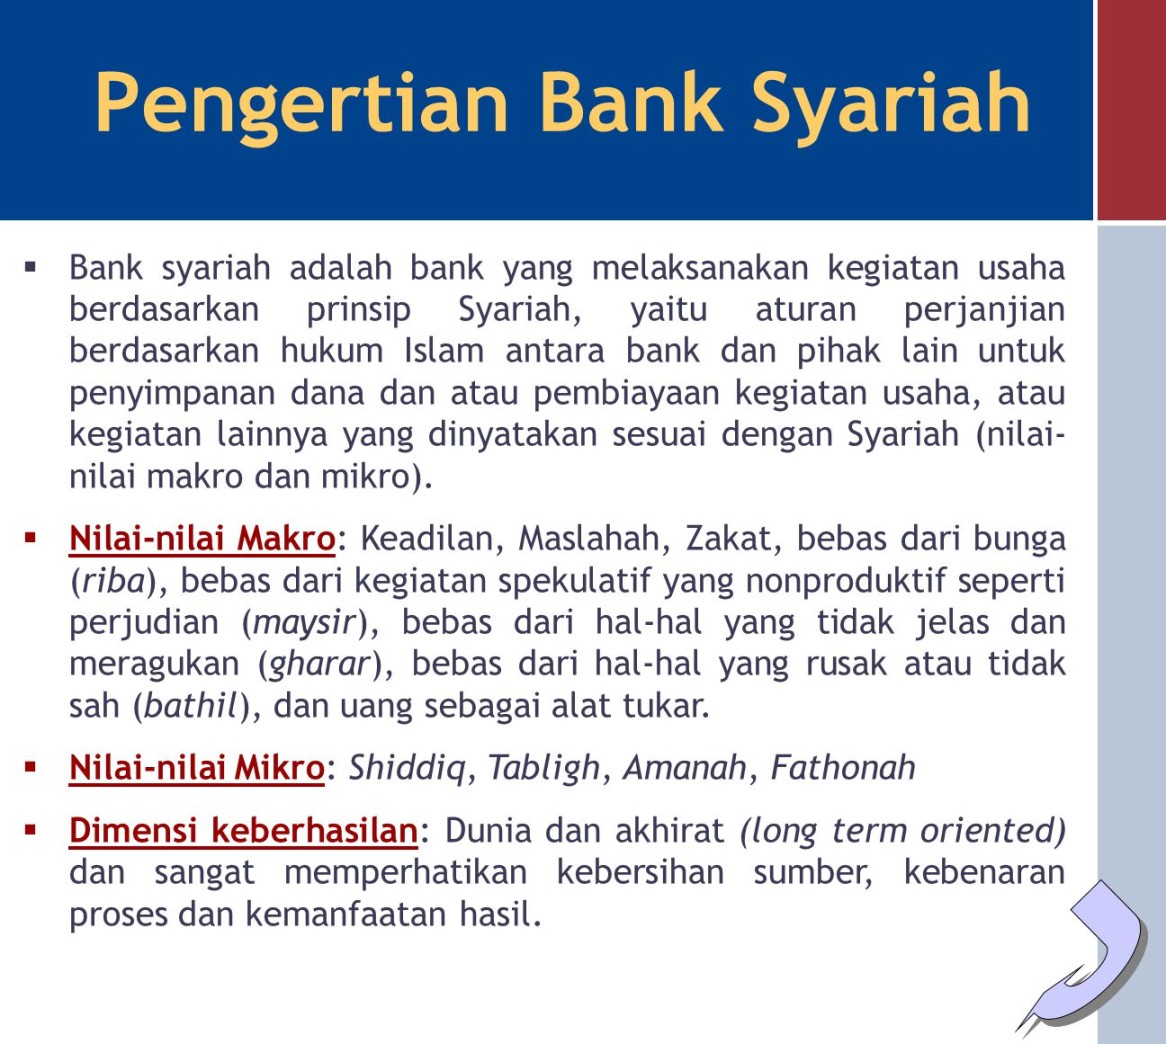 Pengertian Bank Syariah - ppt download